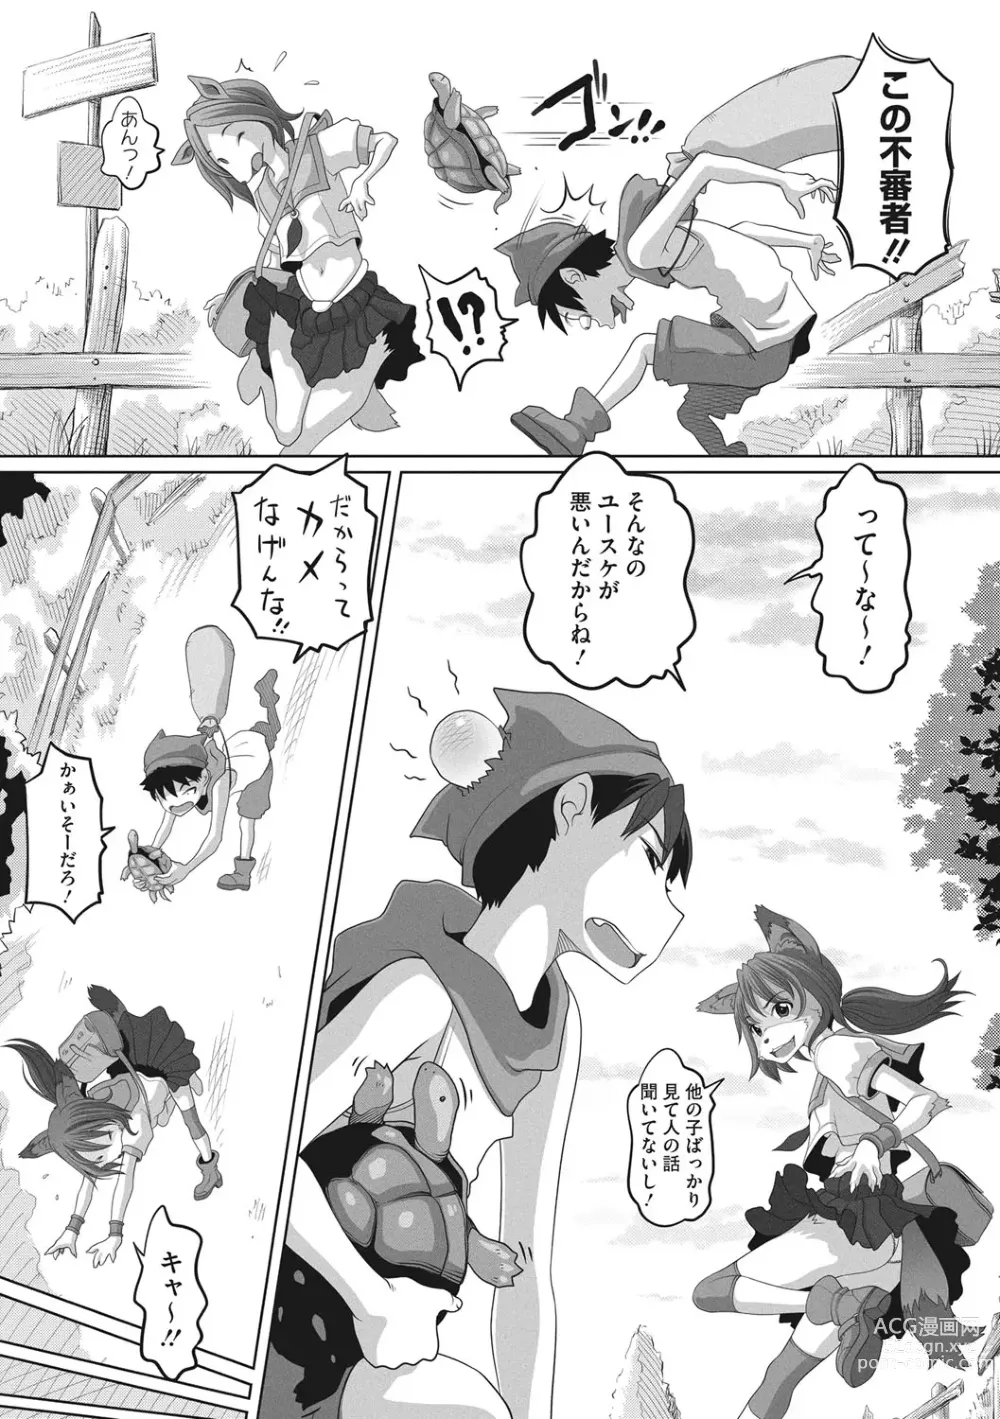 Page 164 of manga Namaiki-mori no 3 S